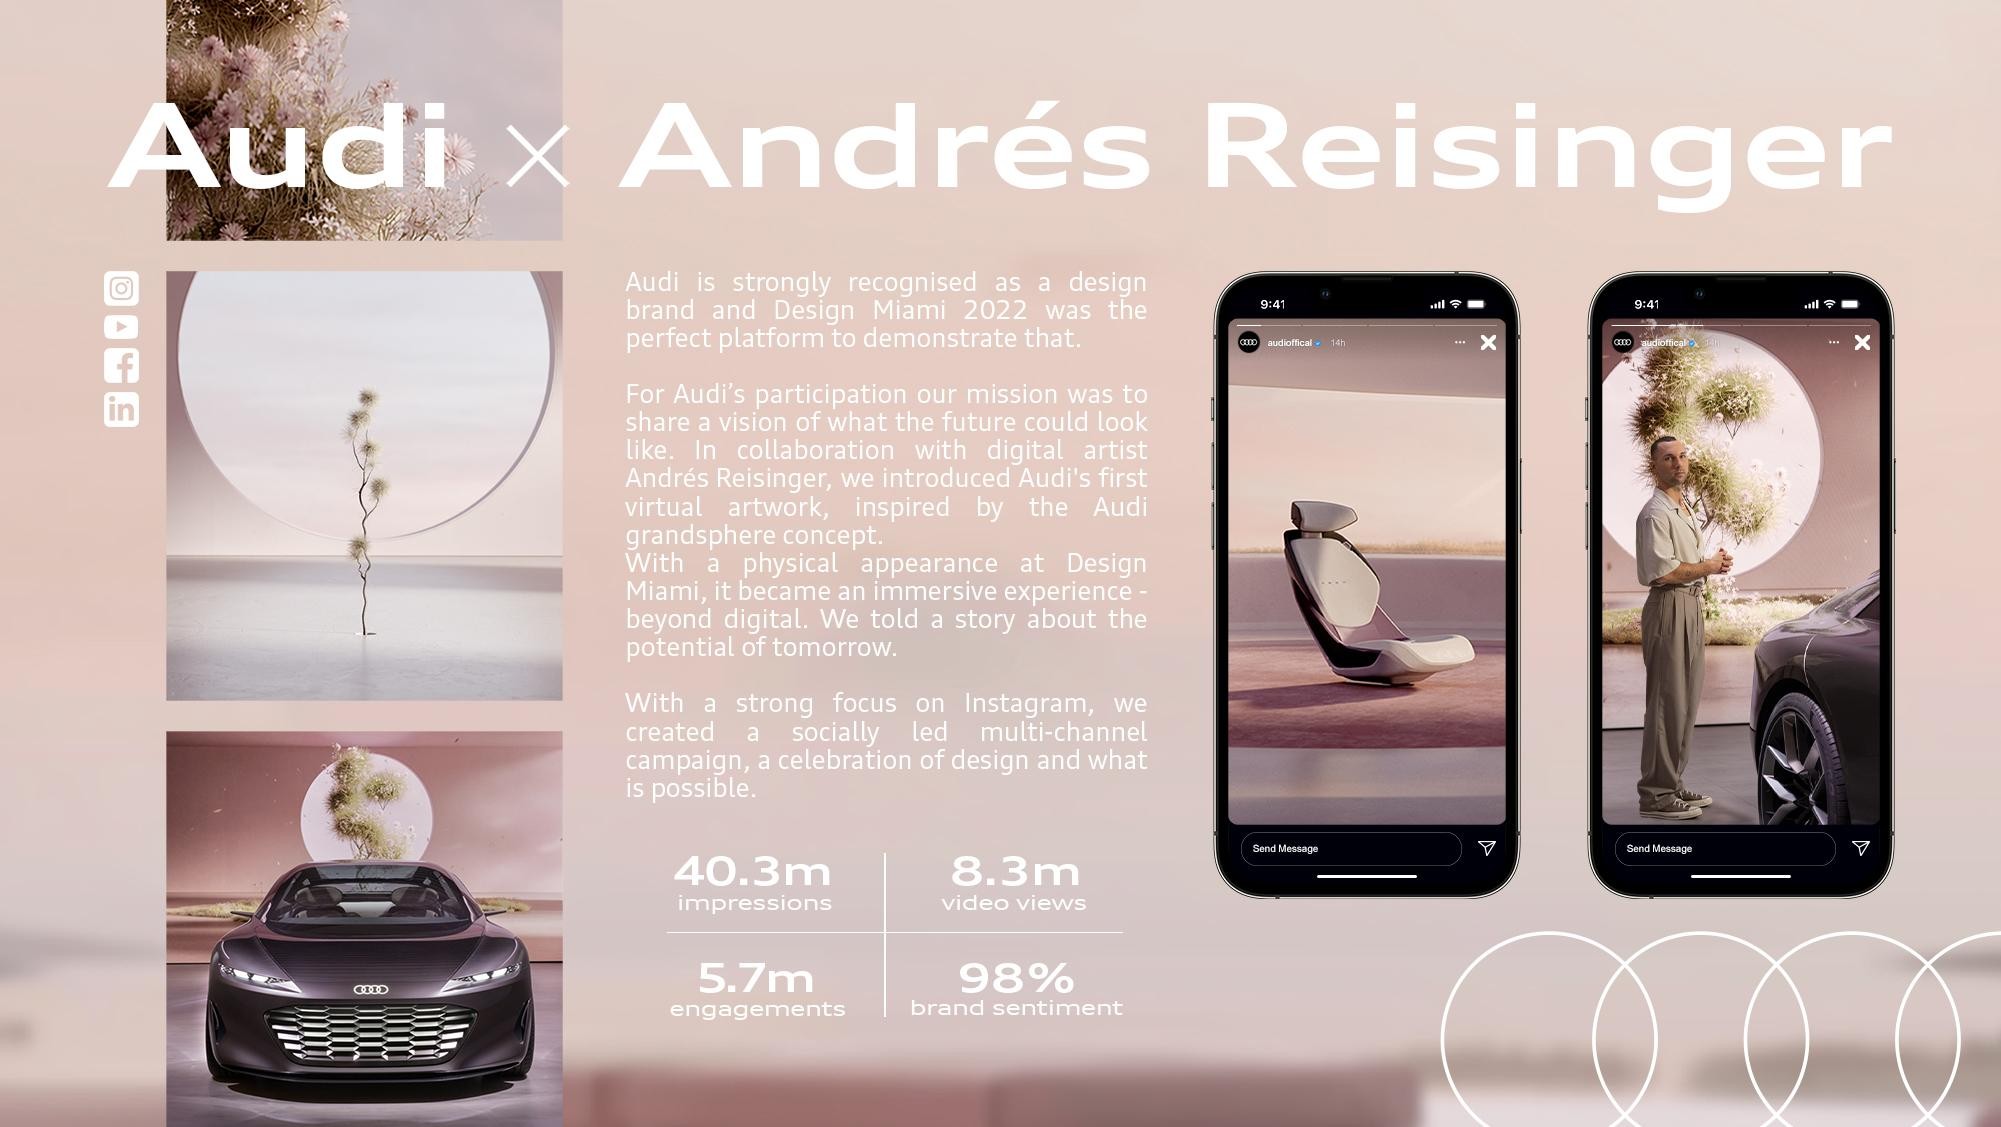 Audi x Andrés Reisinger